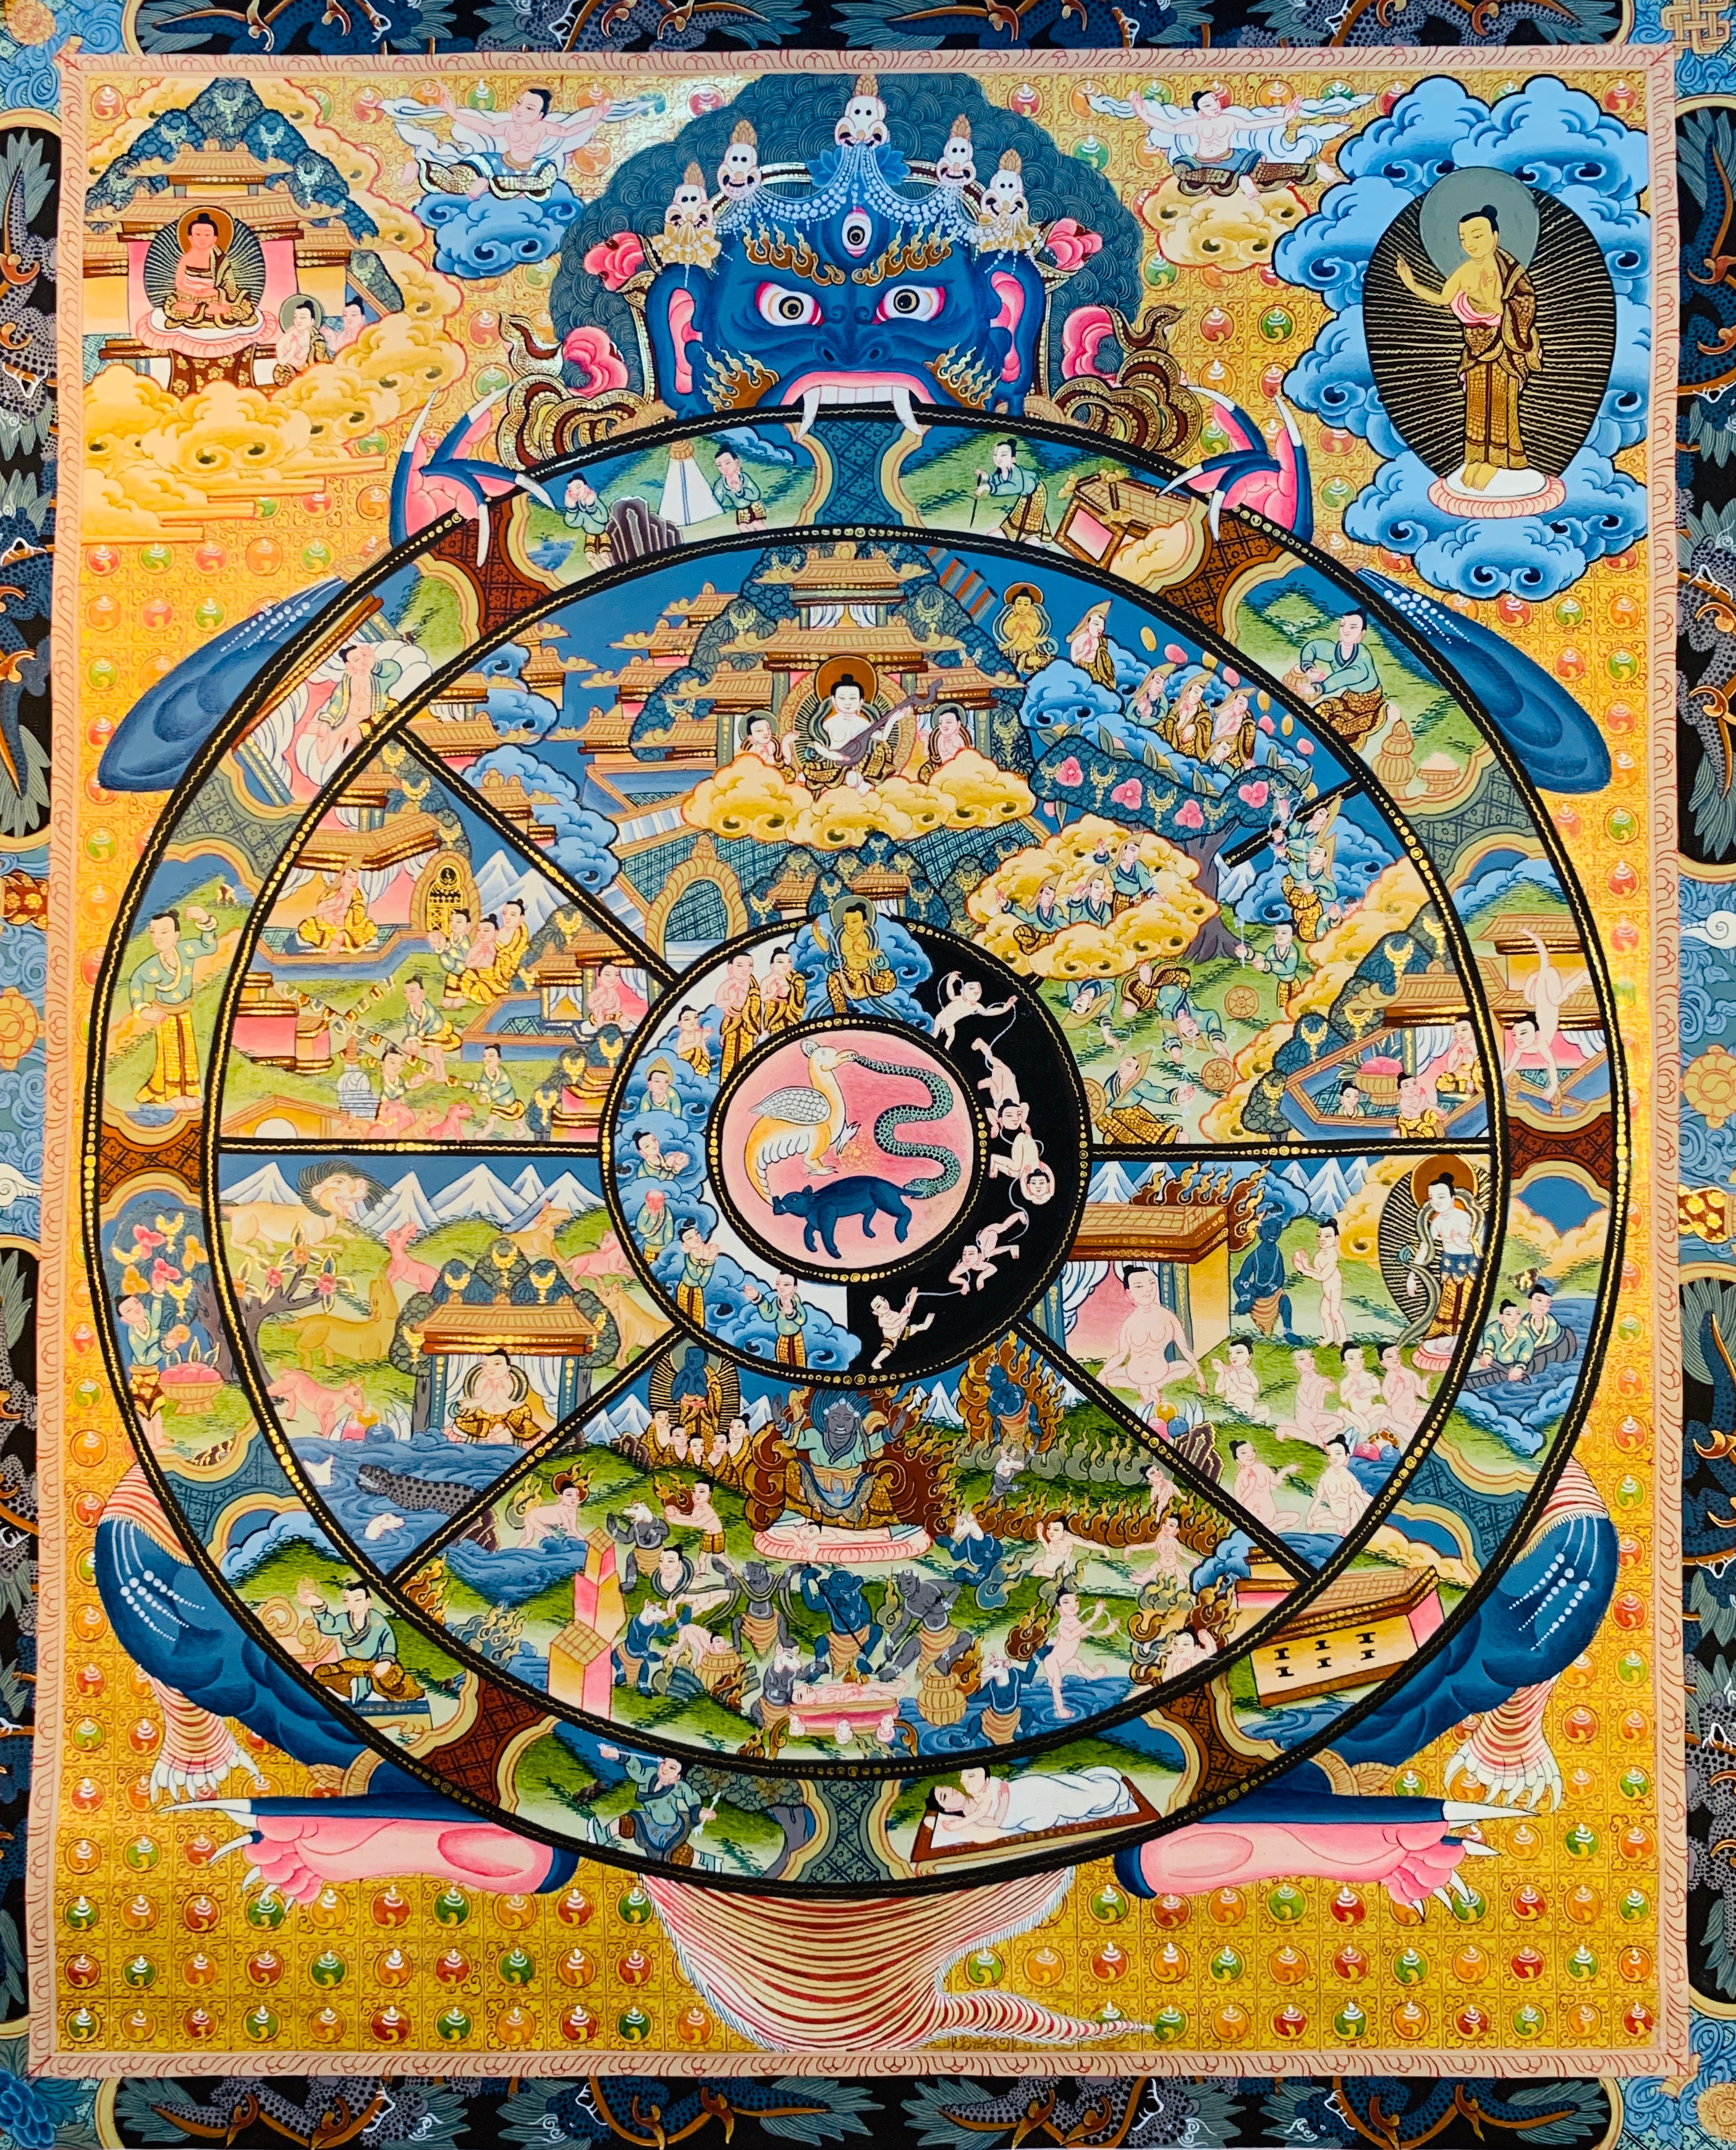 The Wheel of Life Thangka Painting 60*48 - The Thangka